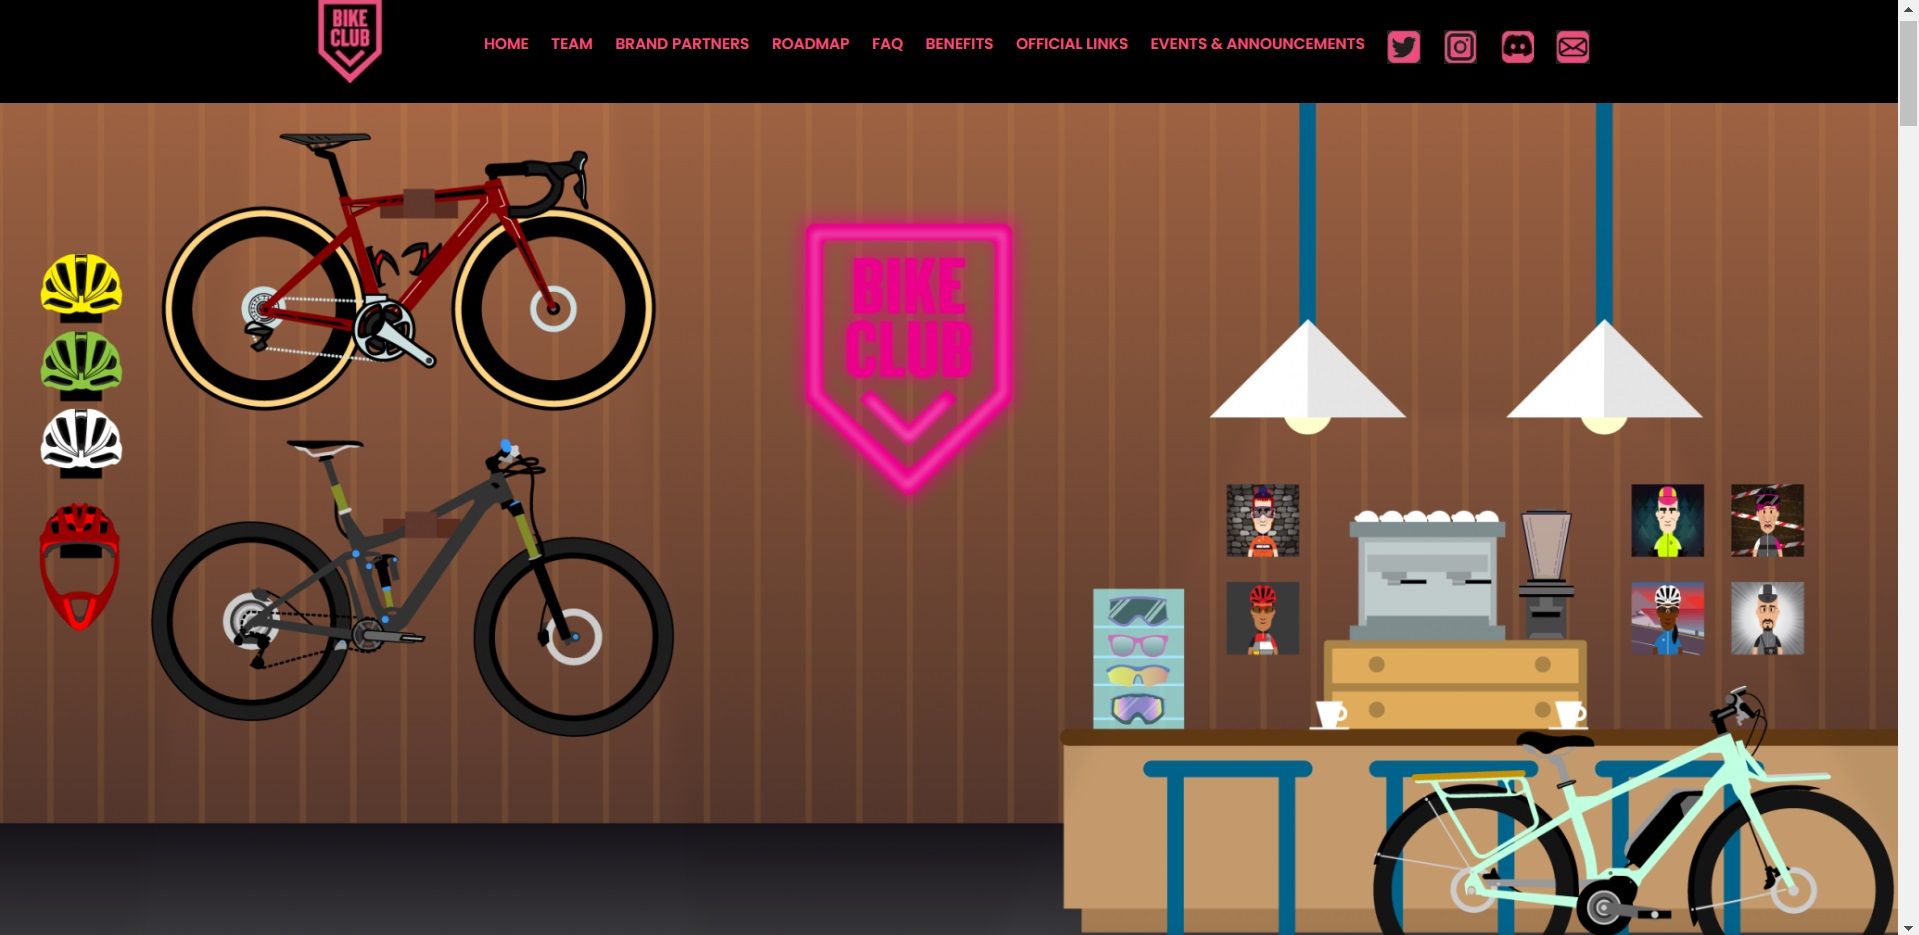 Bike Club website home page